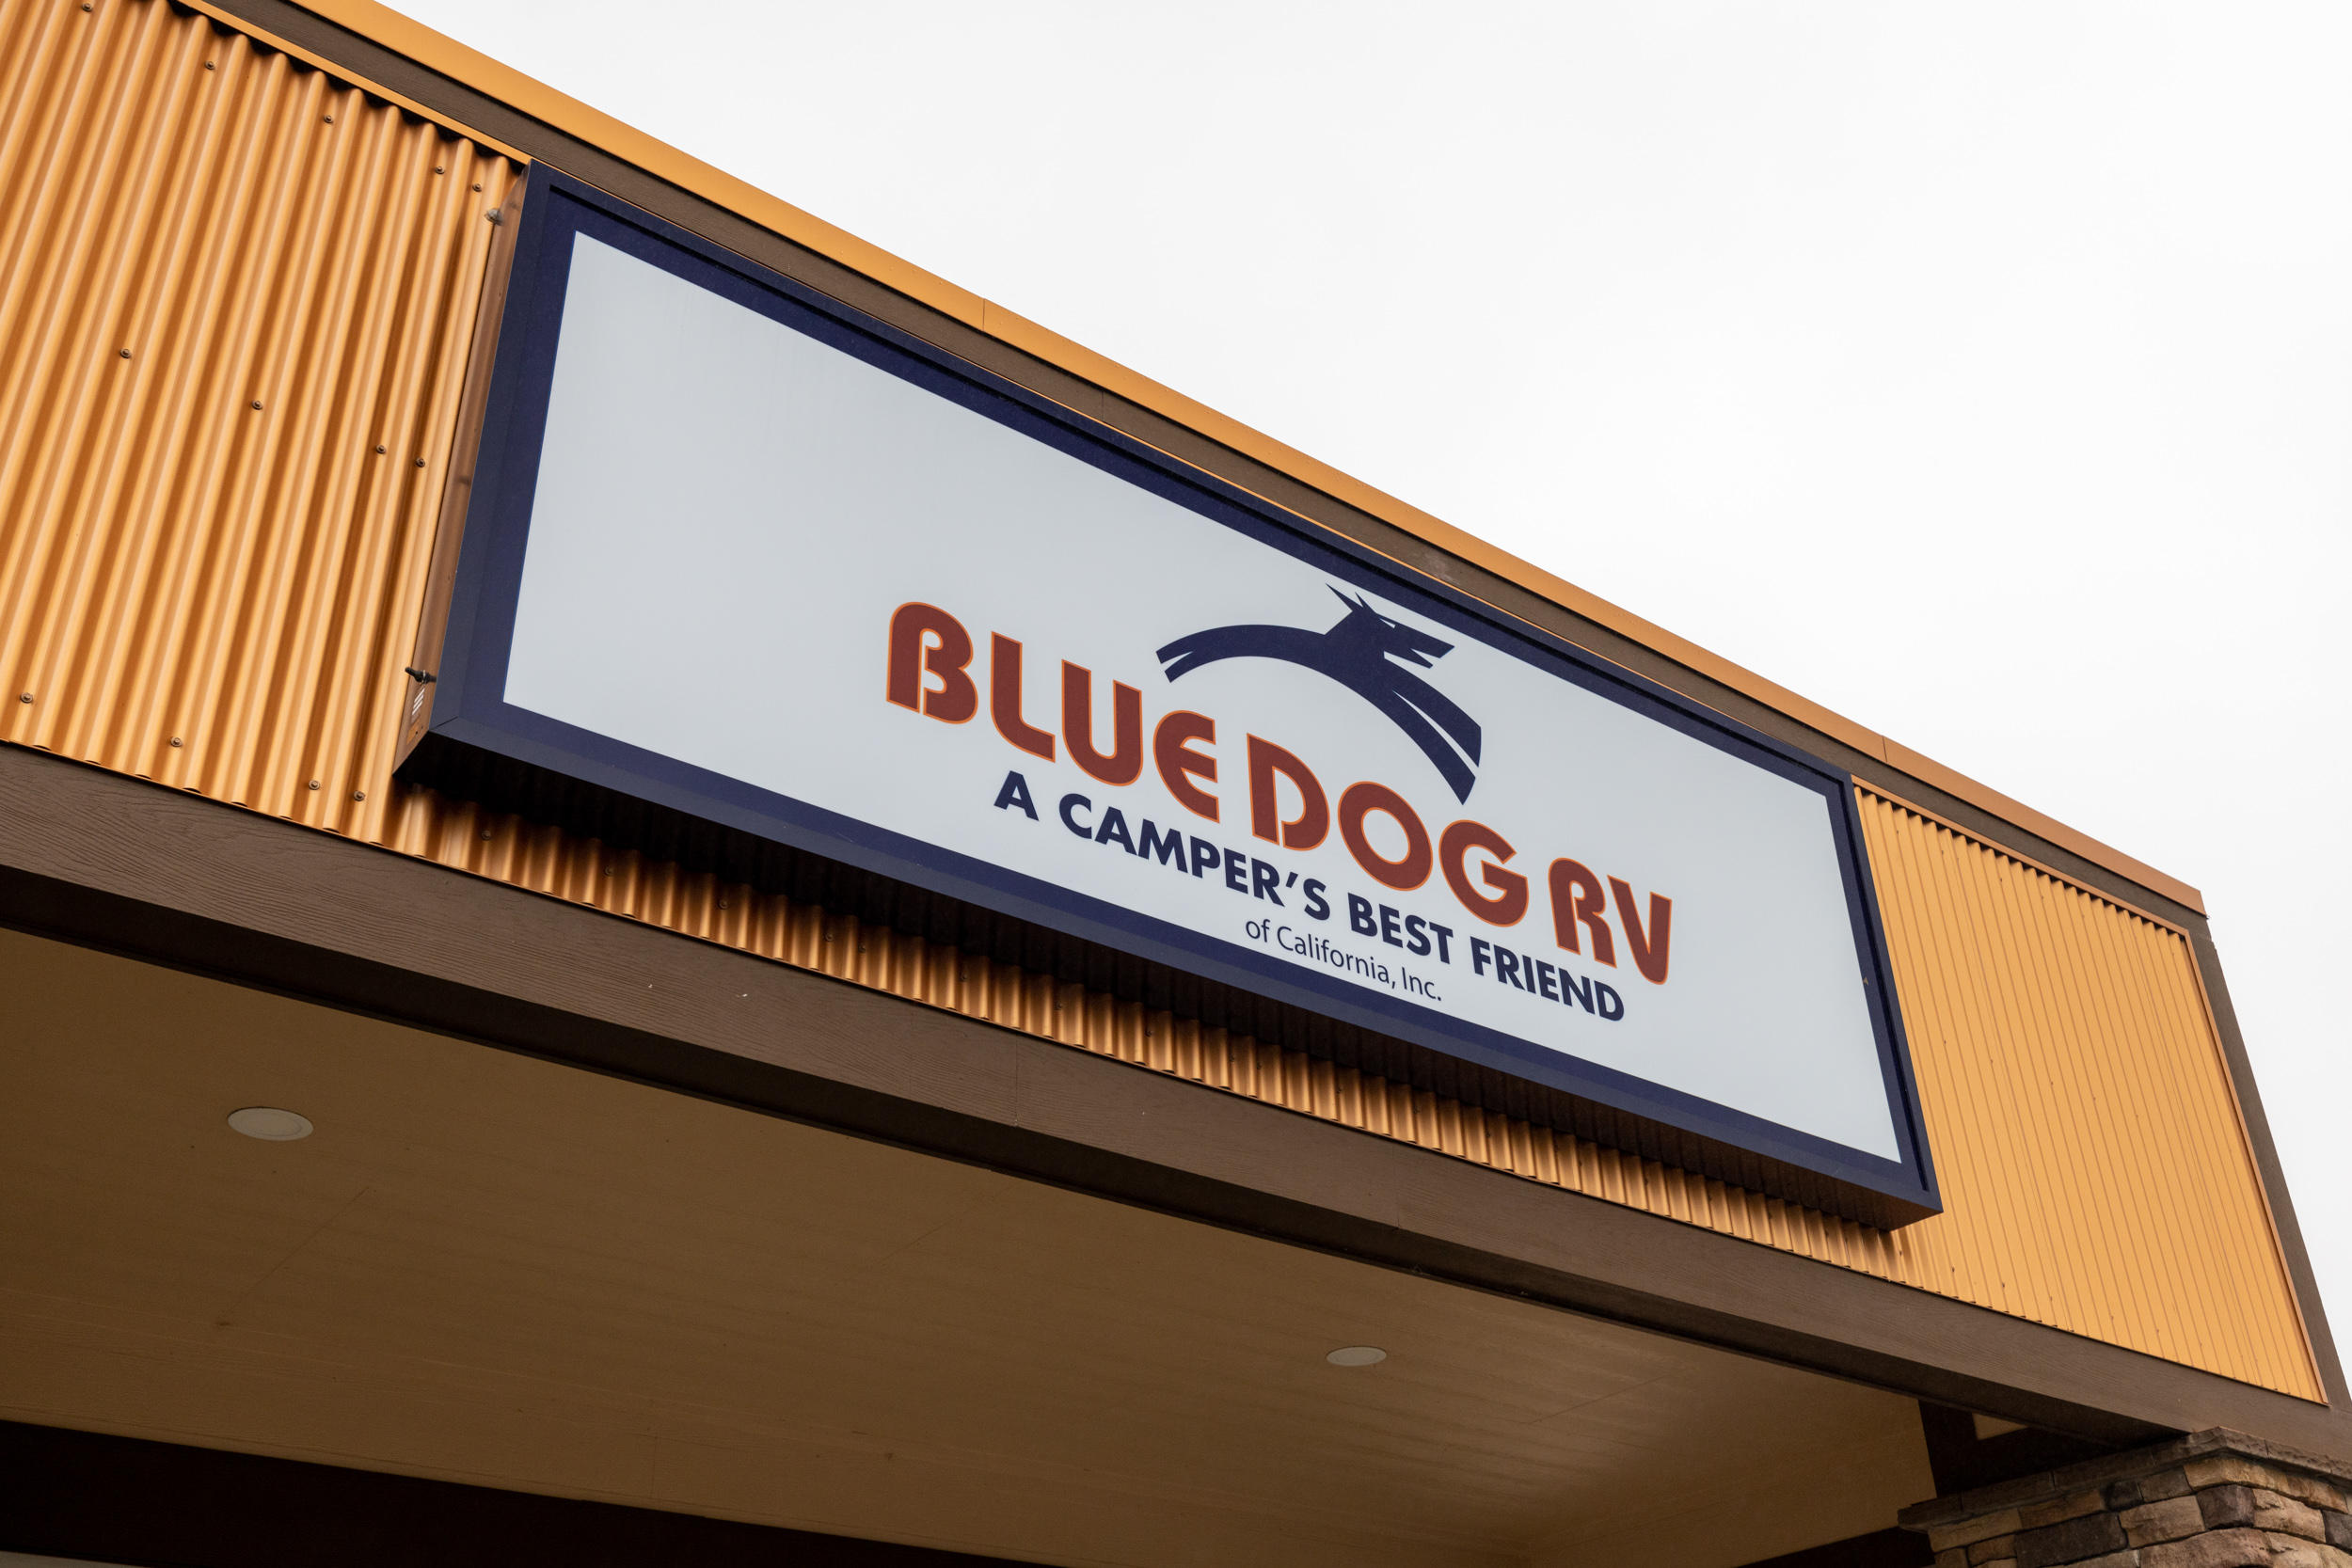 Blue Dog RV Anderson